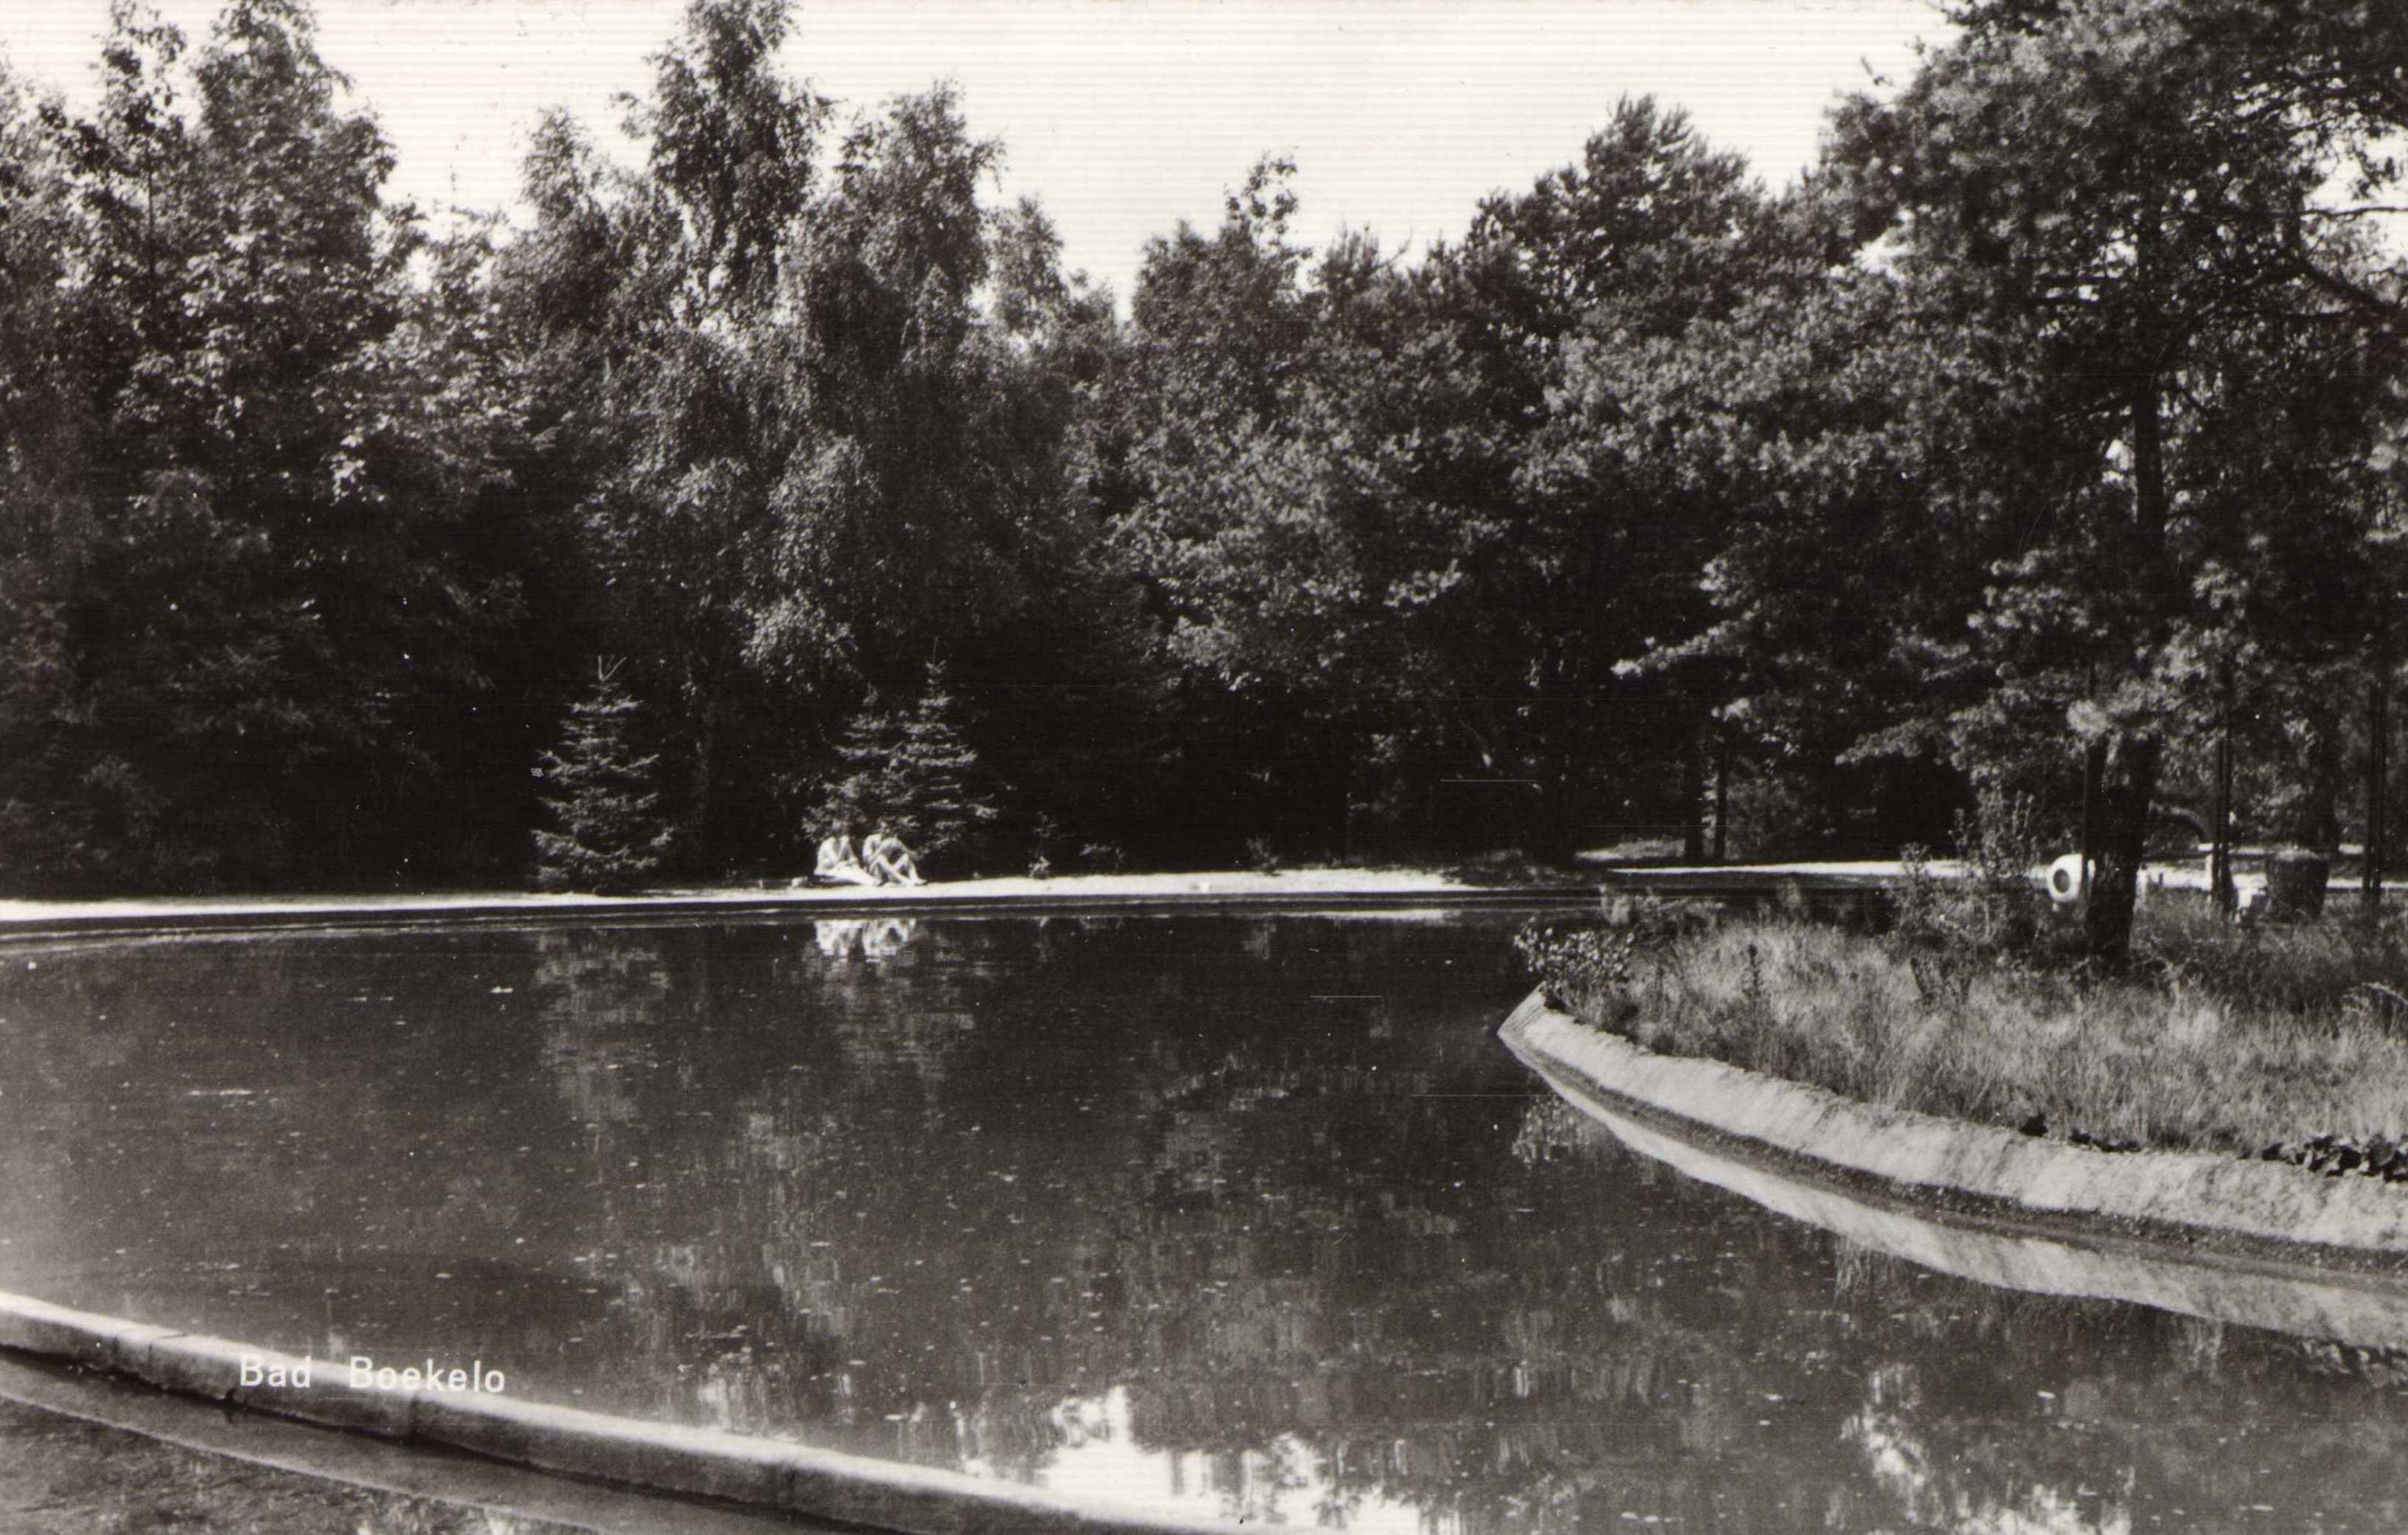 Bad-boekelo-zwemvijver-1965-b82f5c15.jpg